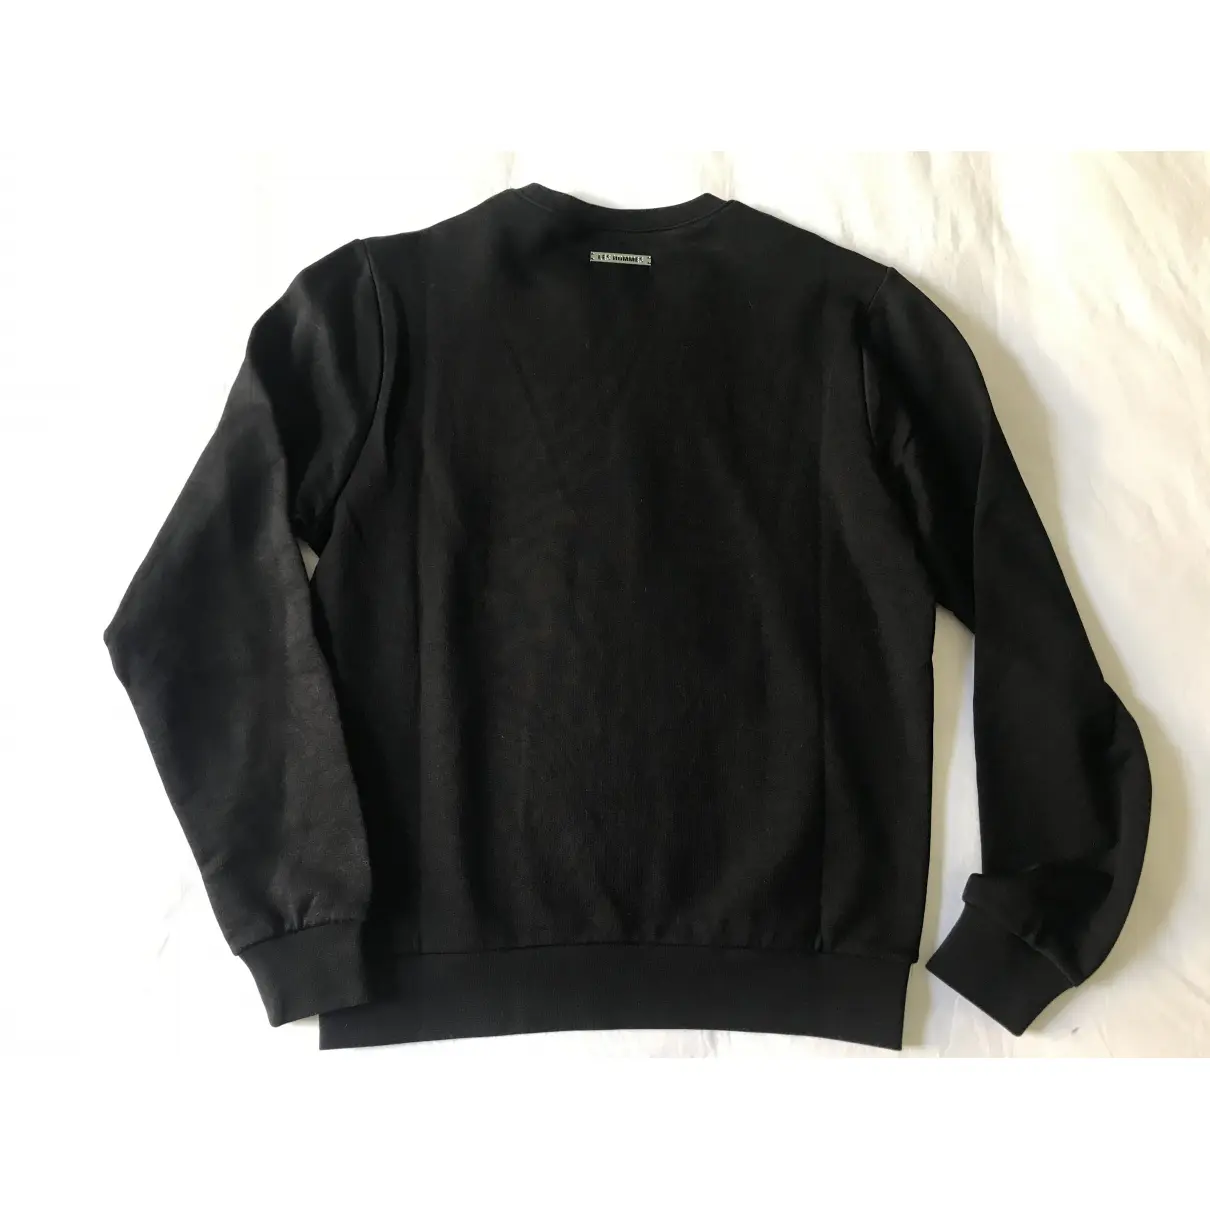 Buy Les Hommes Black Cotton Knitwear & Sweatshirt online